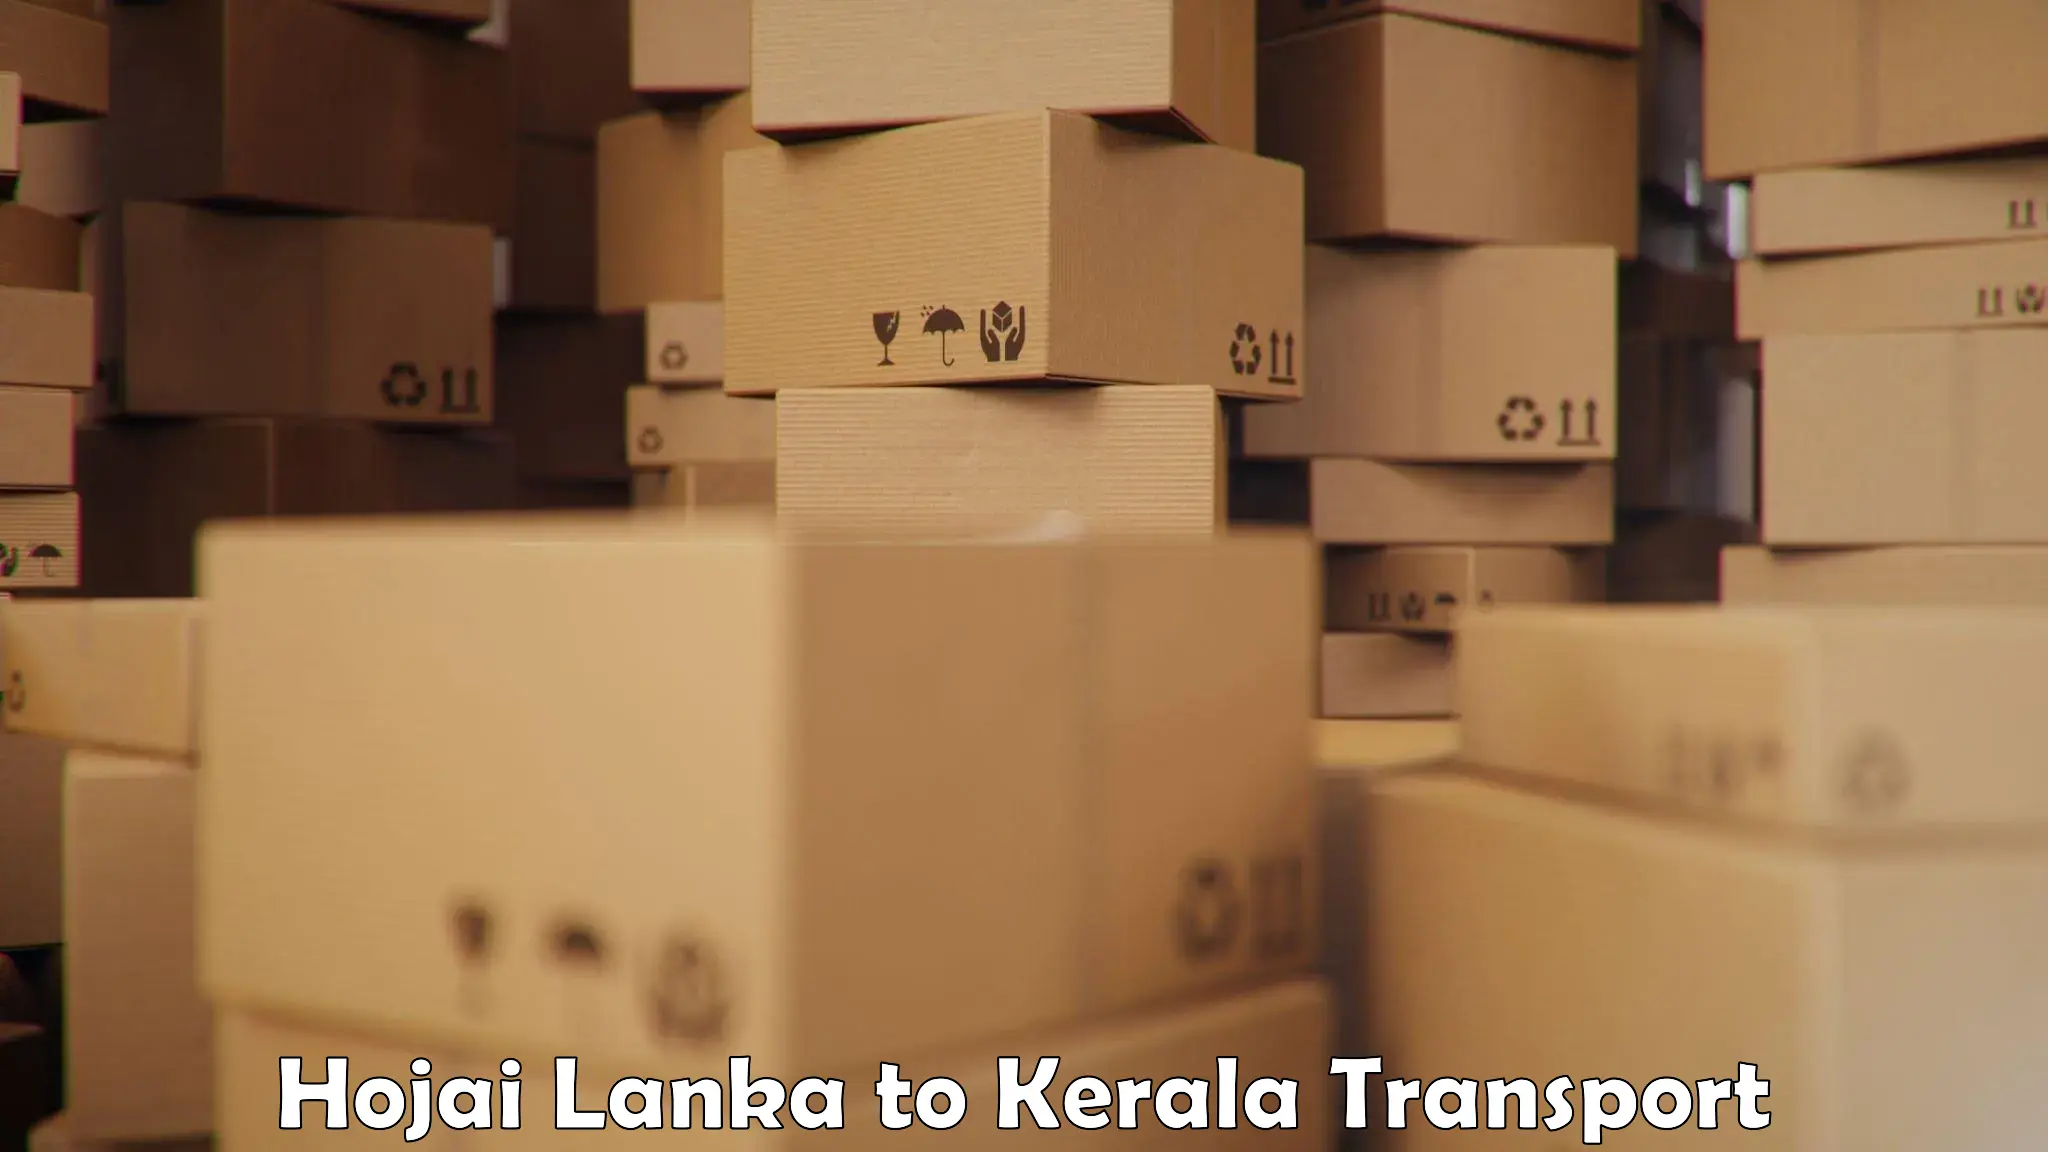 Container transport service Hojai Lanka to Poojapura